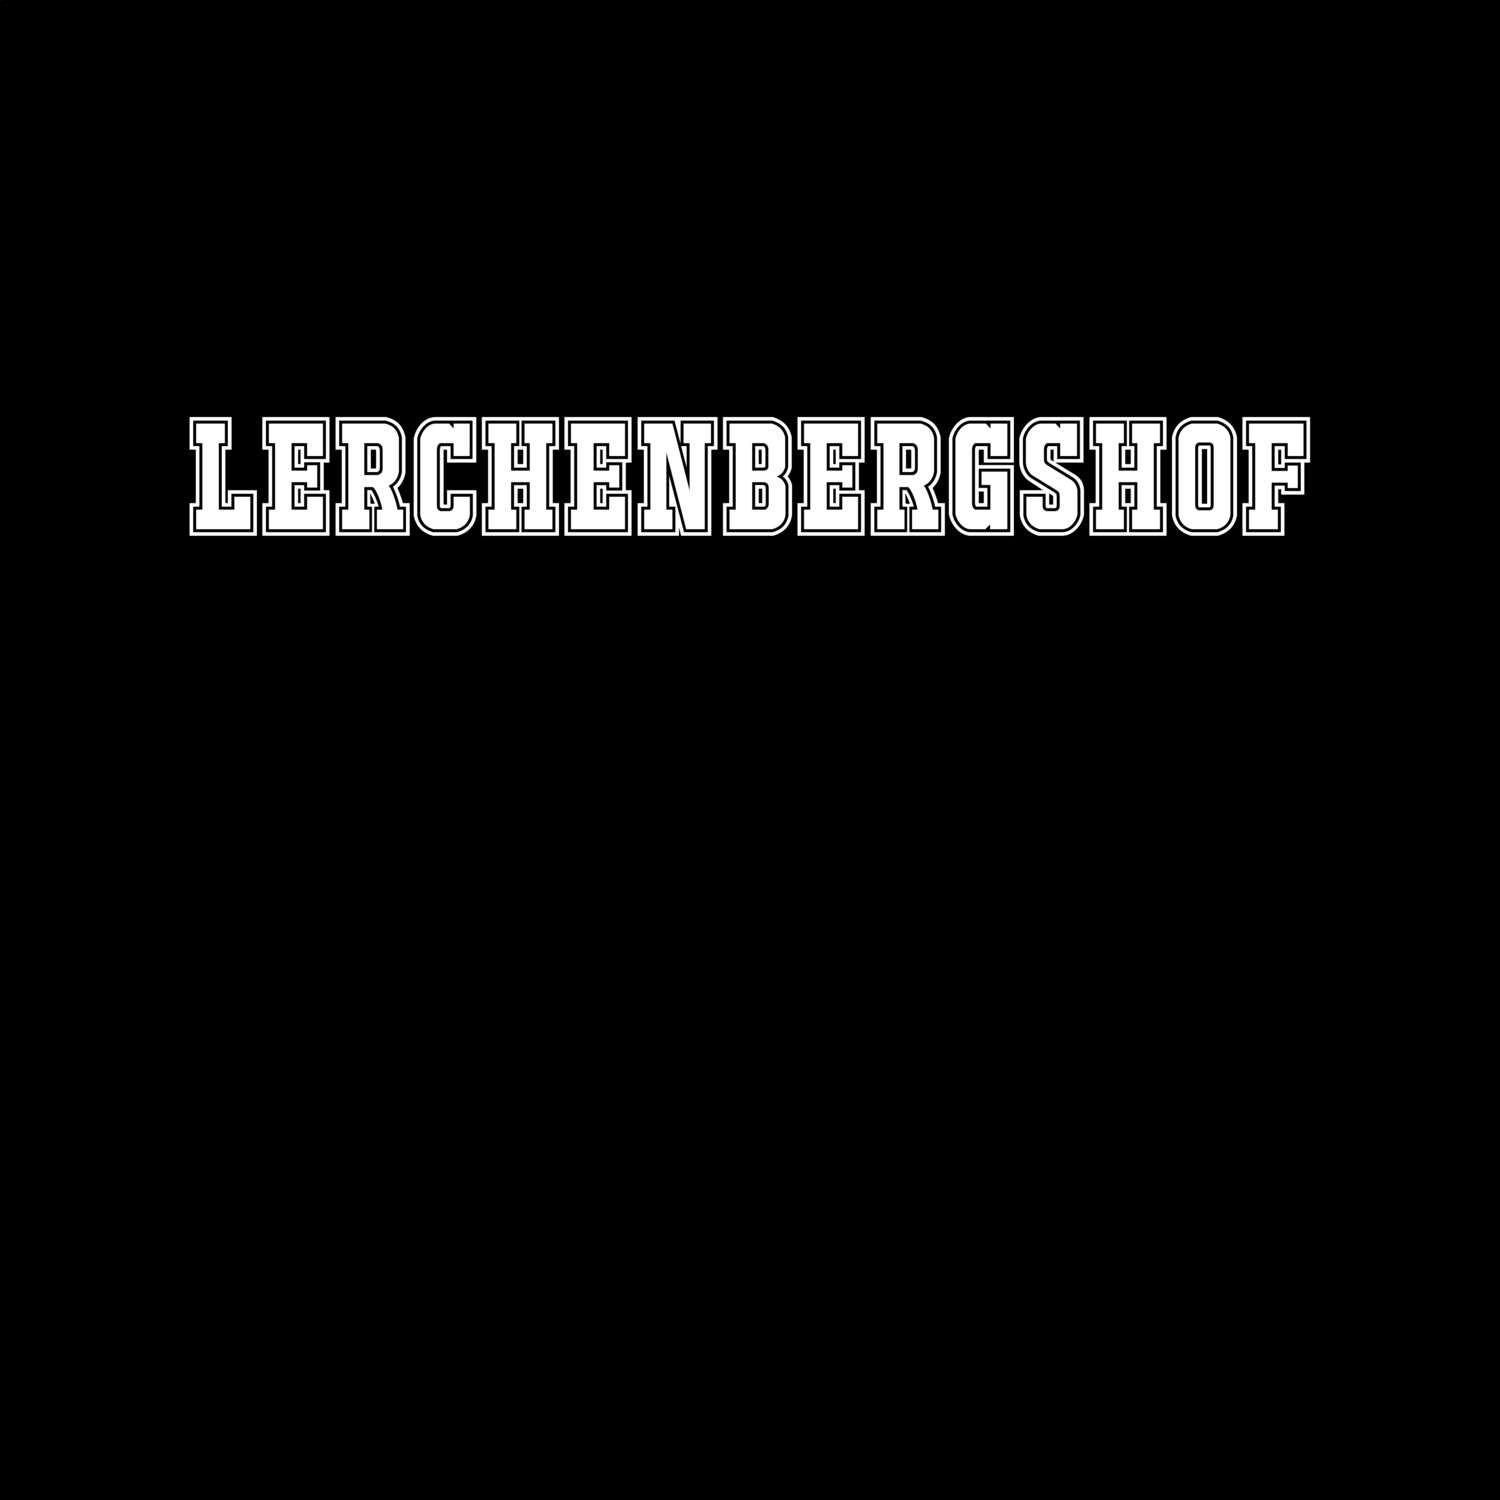 Lerchenbergshof T-Shirt »Classic«